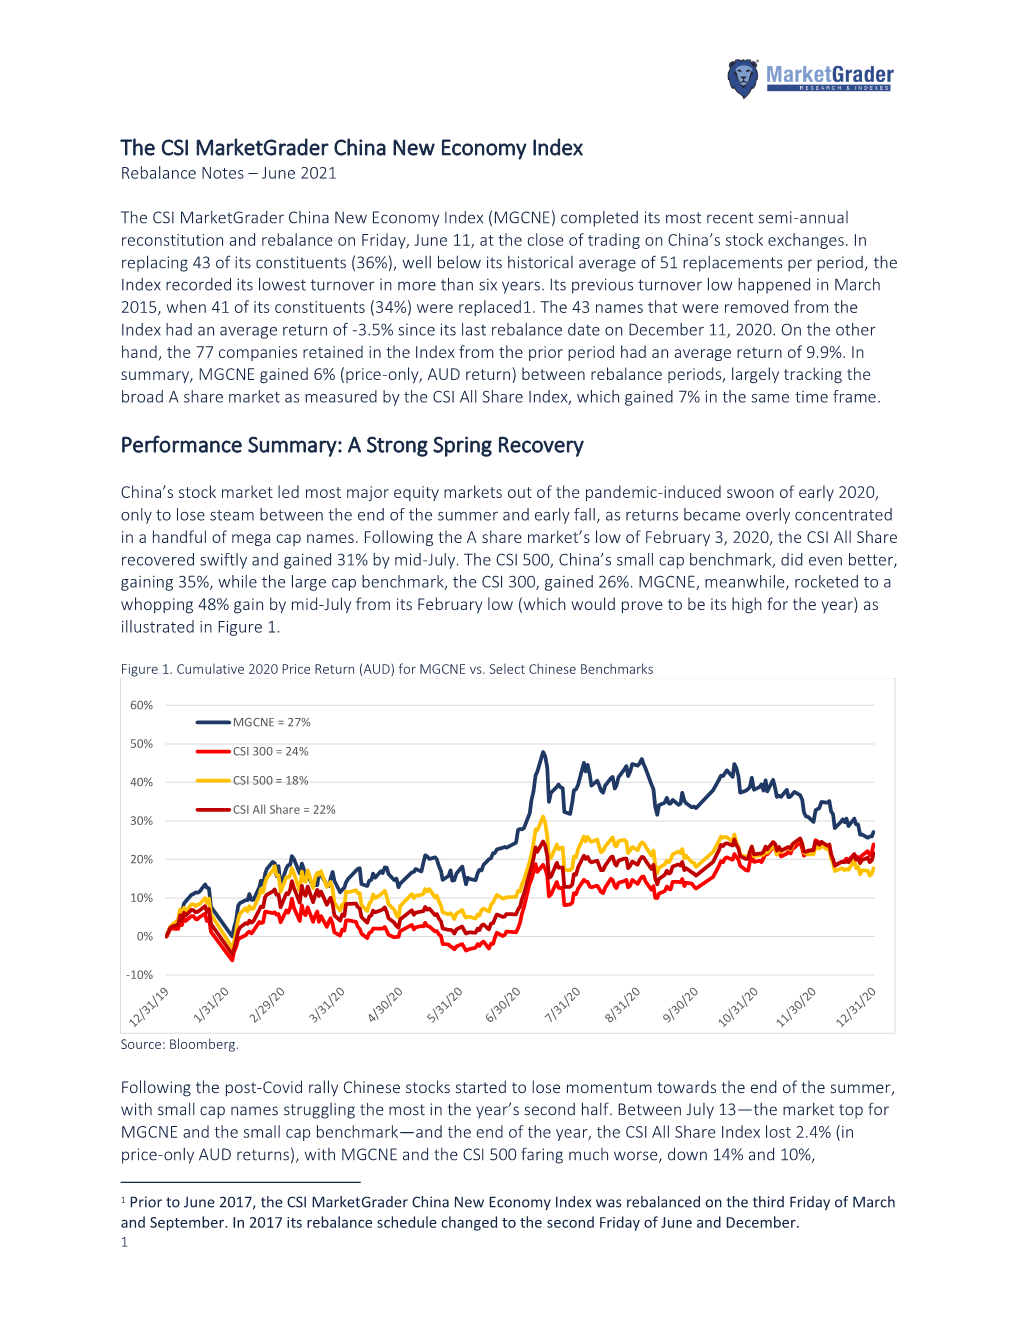 The CSI Marketgrader China New Economy Index Performance